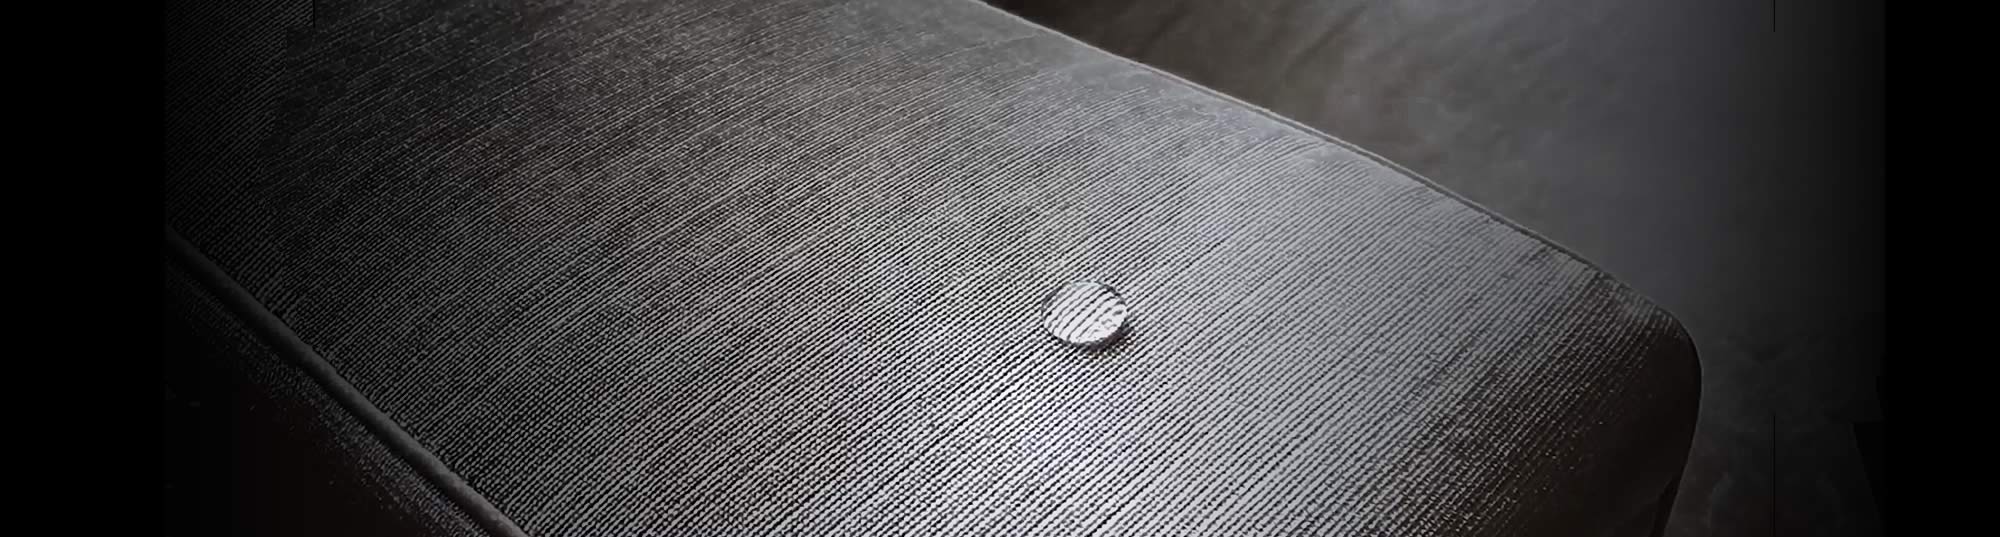 Water bead on Chenille Fabric - All Clean FiberShield